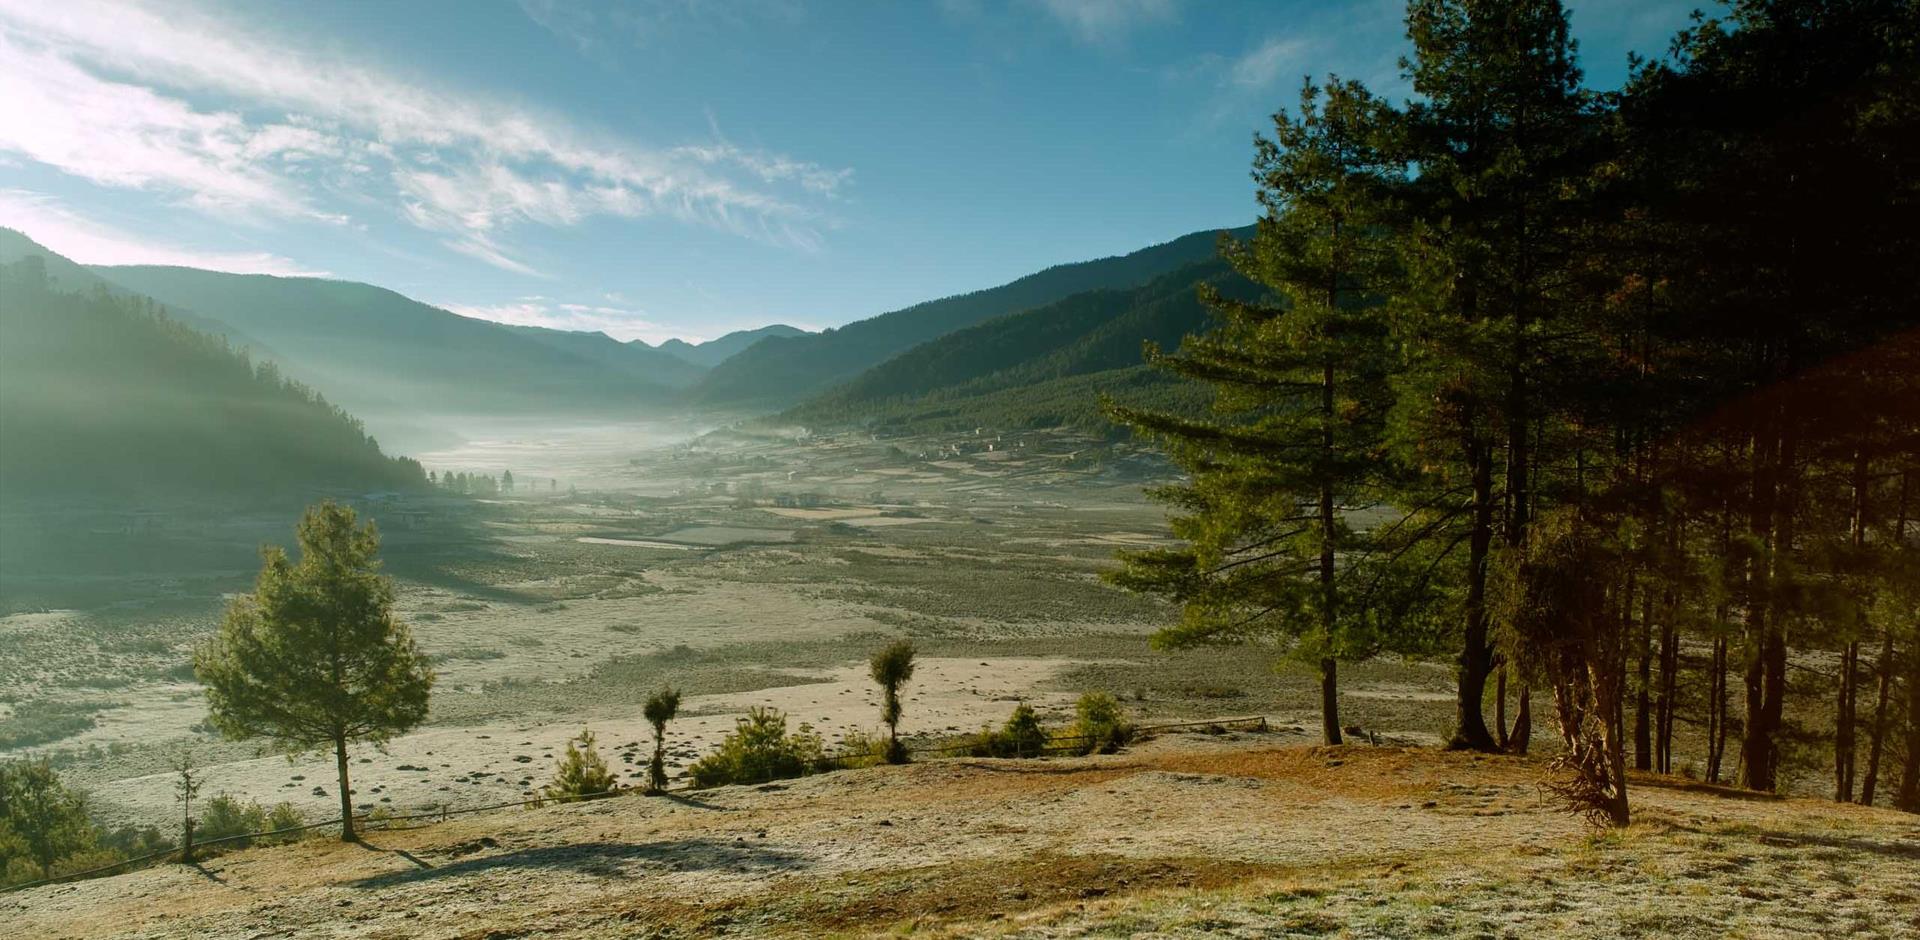 View from Amankora, Gangtey, Bhutan